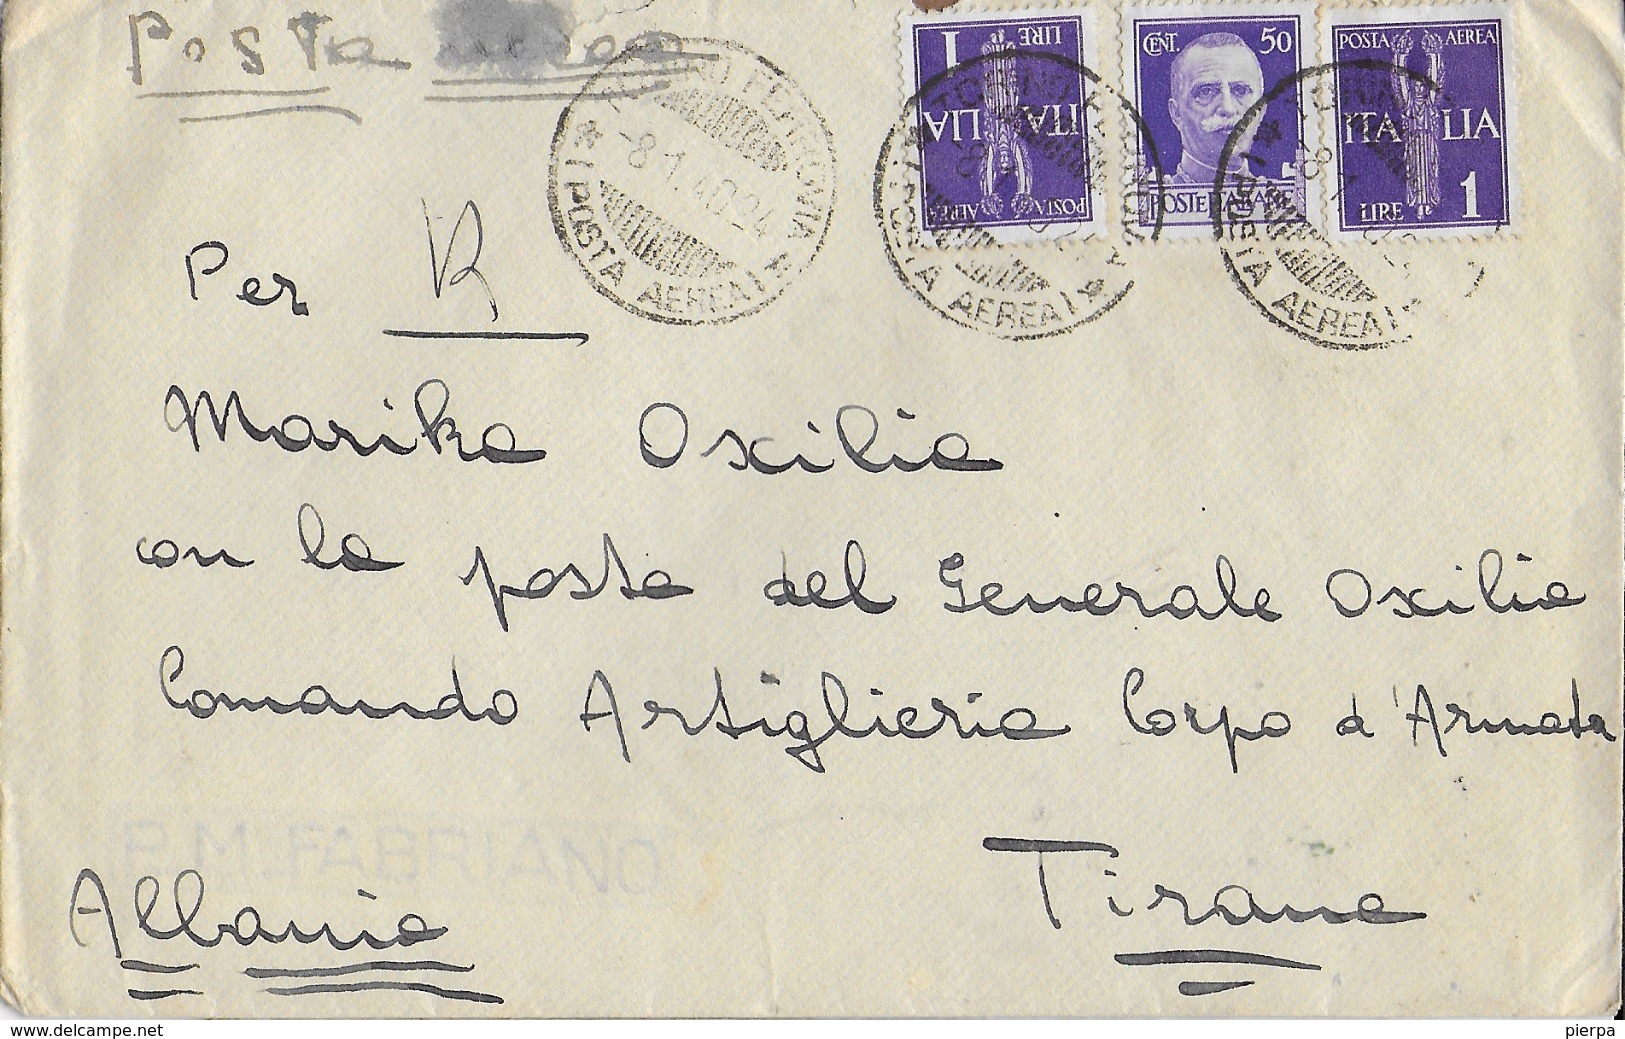 STORIA POSTALE REGNO - BUSTA PER VIA AEREA DA MILANO A TIRANA 1940 - Marcophilie (Avions)